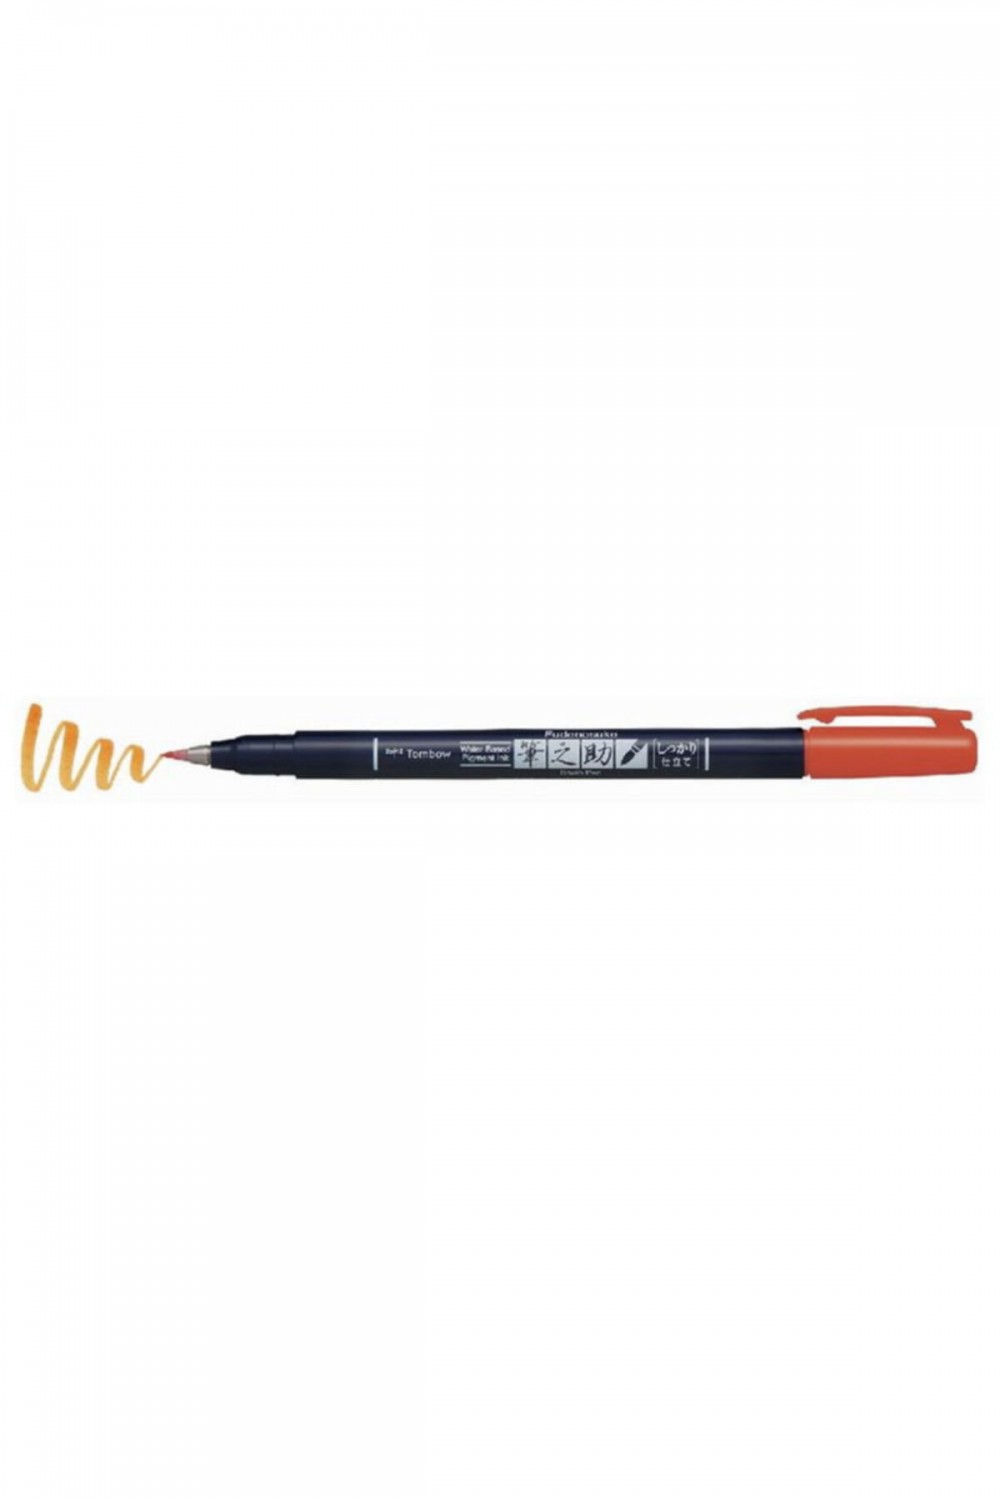 Tombow Fudenosuke Brush Pen Fırça Uçlu Kalem Sert Uç - Turuncu